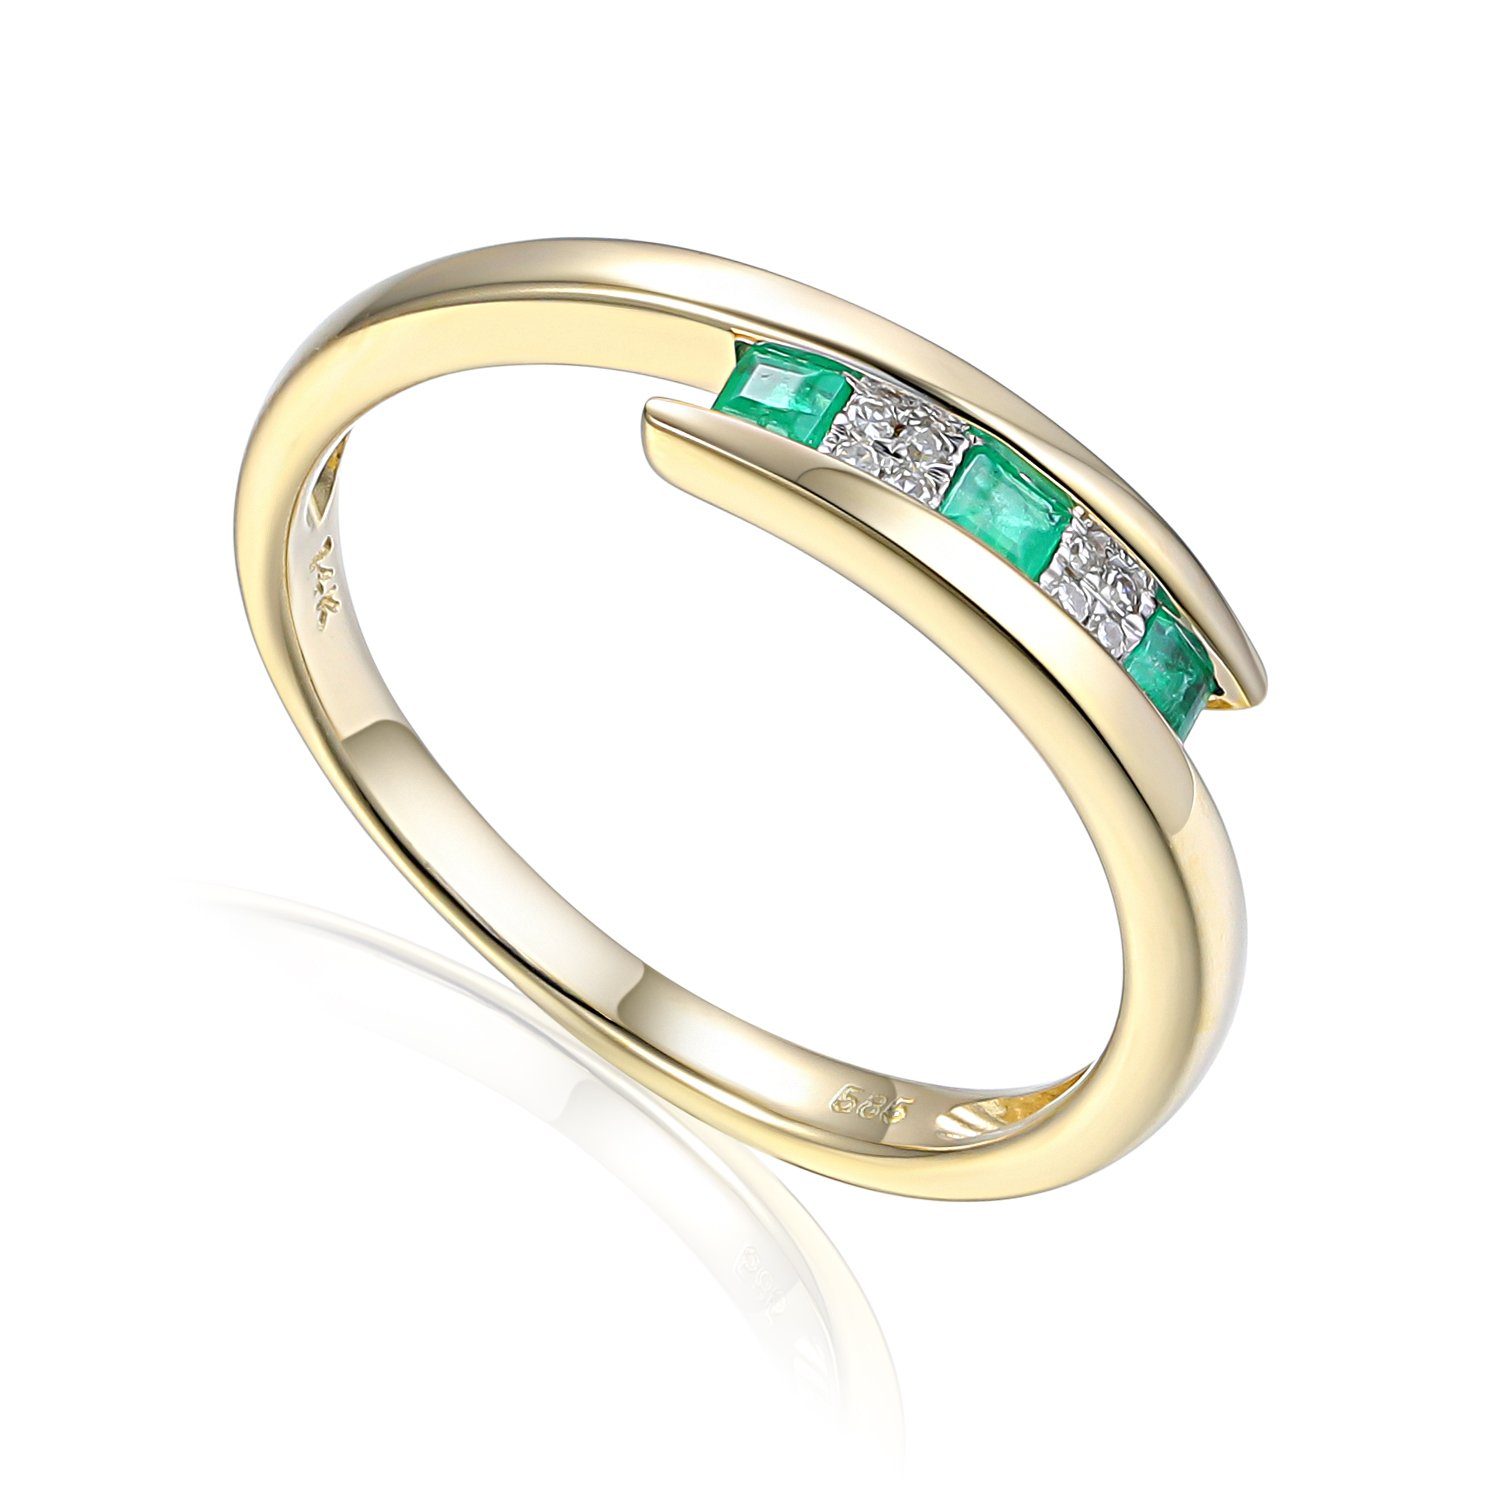 Stella-Jewellery Solitärring 585er Gold Ring mit Smaragd 0,13ct /Diamant  0,02ct (inkl. Etui, Smaragd ca. 0.13ct Diamant 0,02ct - inkl. Etui),  Smaragd 0,13ct und Brillanten 0,02ct.